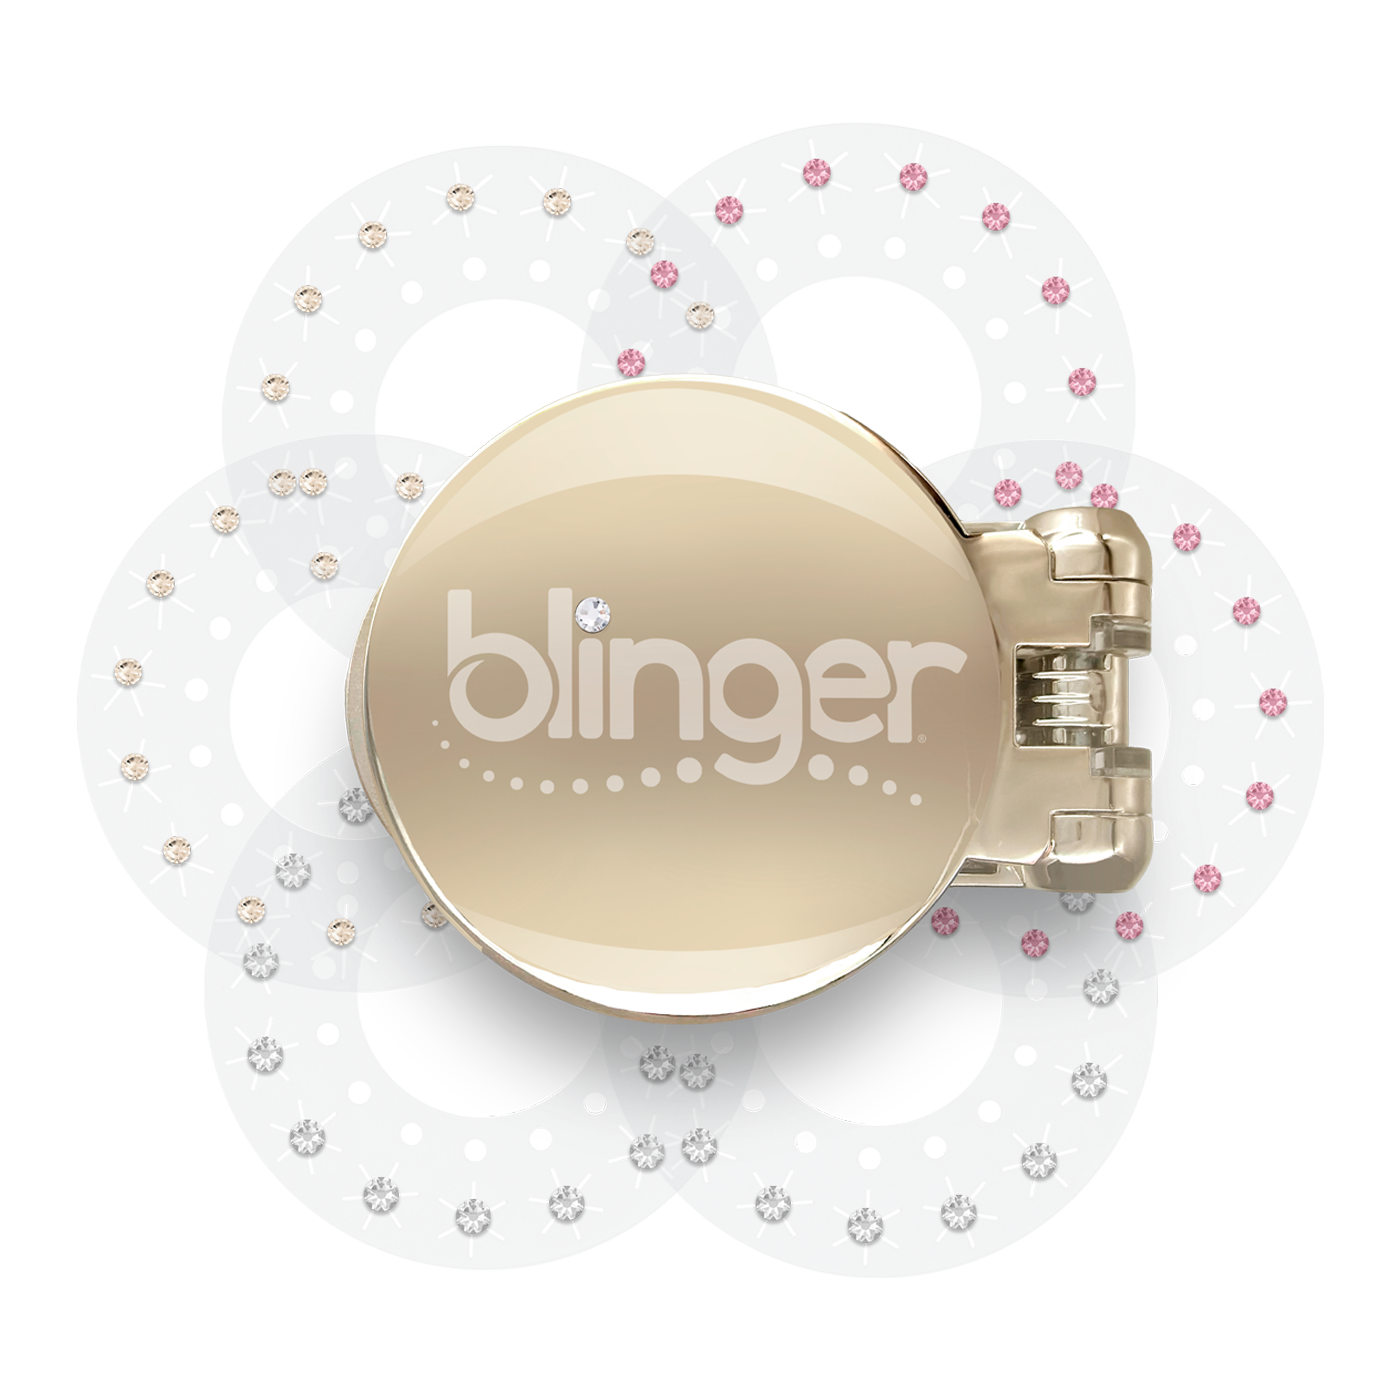 blinger® Shimmer Starter Kit with Gold-Plated blinger® Styling Tool + 90 Precision-Cut Swarovski® Glass Crystals